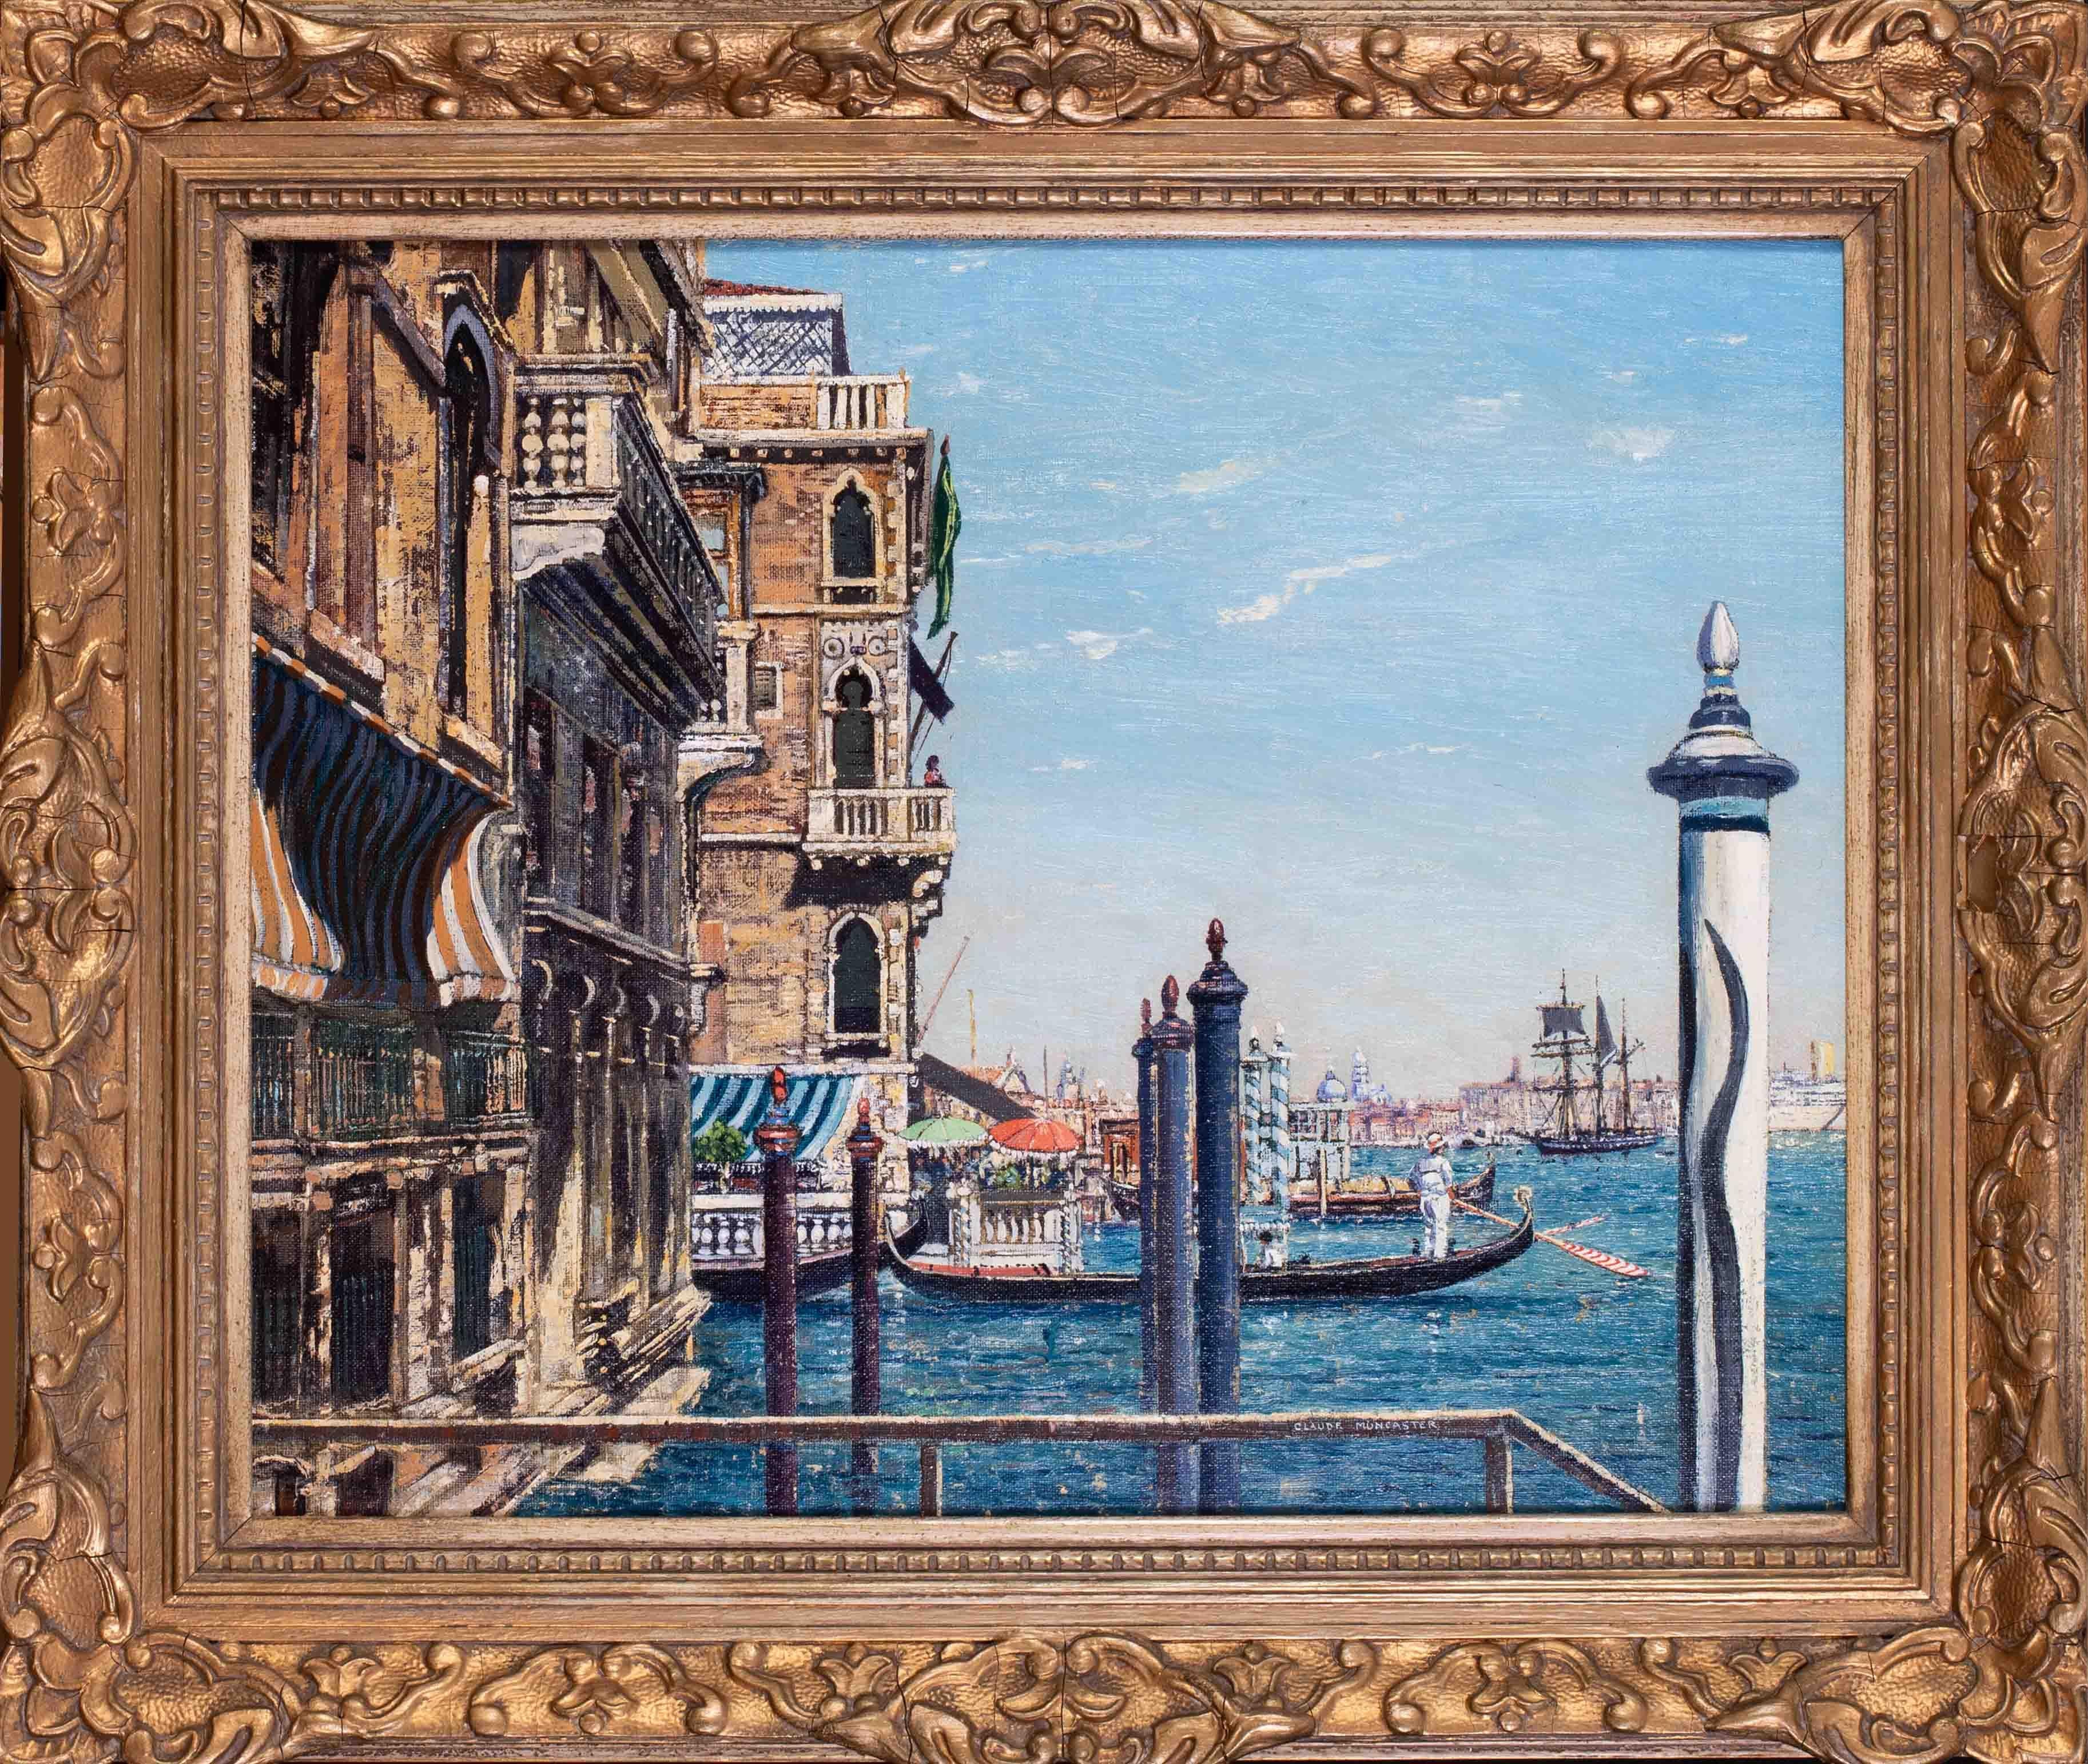 British, 20th Century painting of Venice by West Sussex artist Claude Muncaster